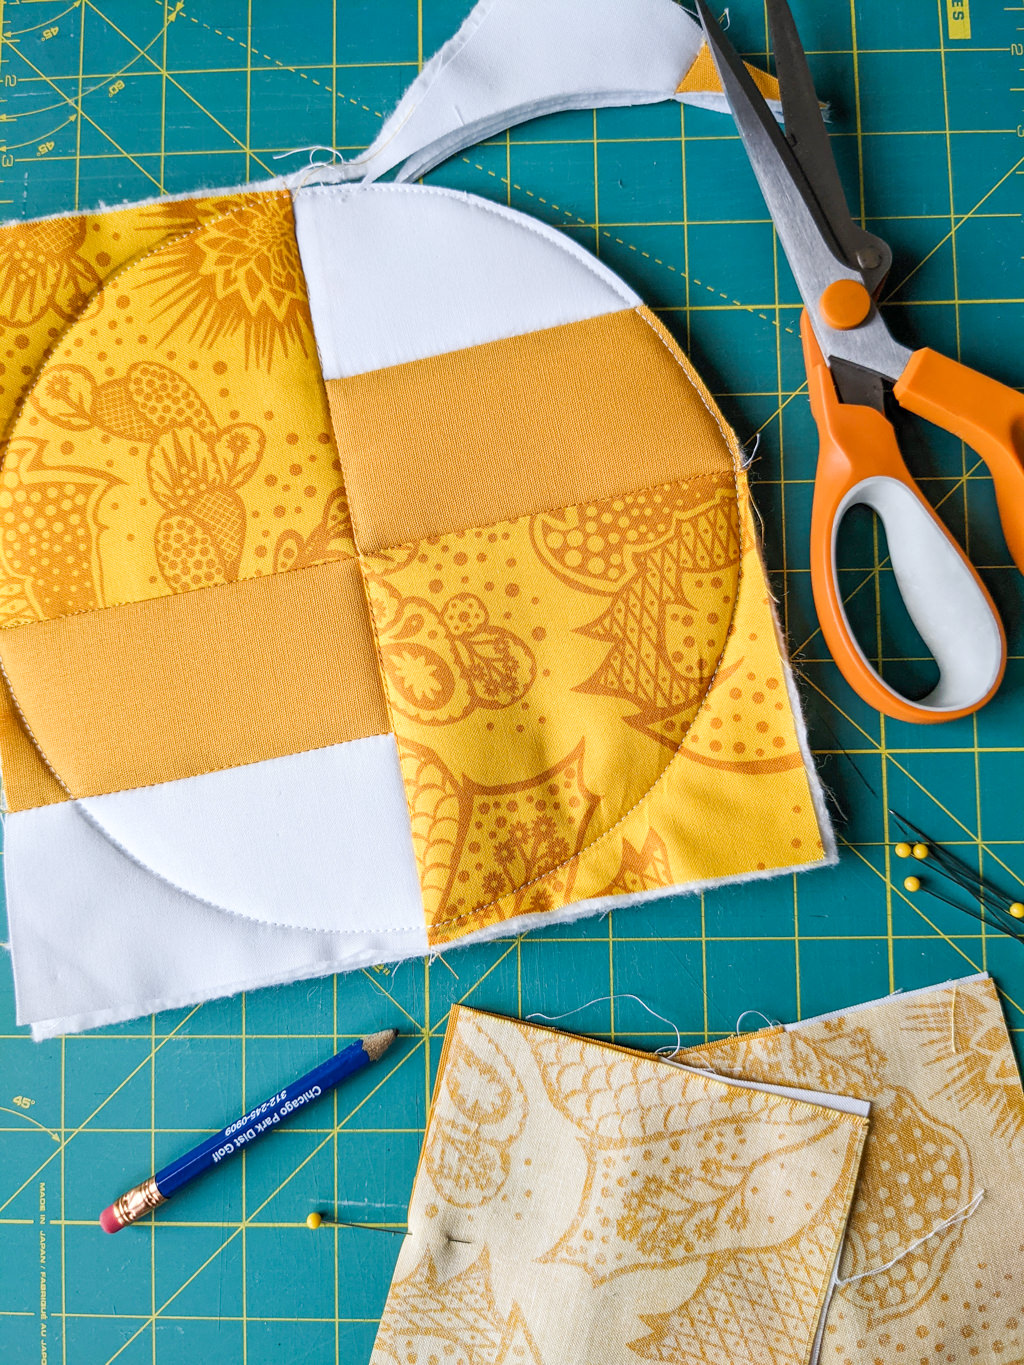 Modern quilted potholders DIY sewing pattern  Merriment Design